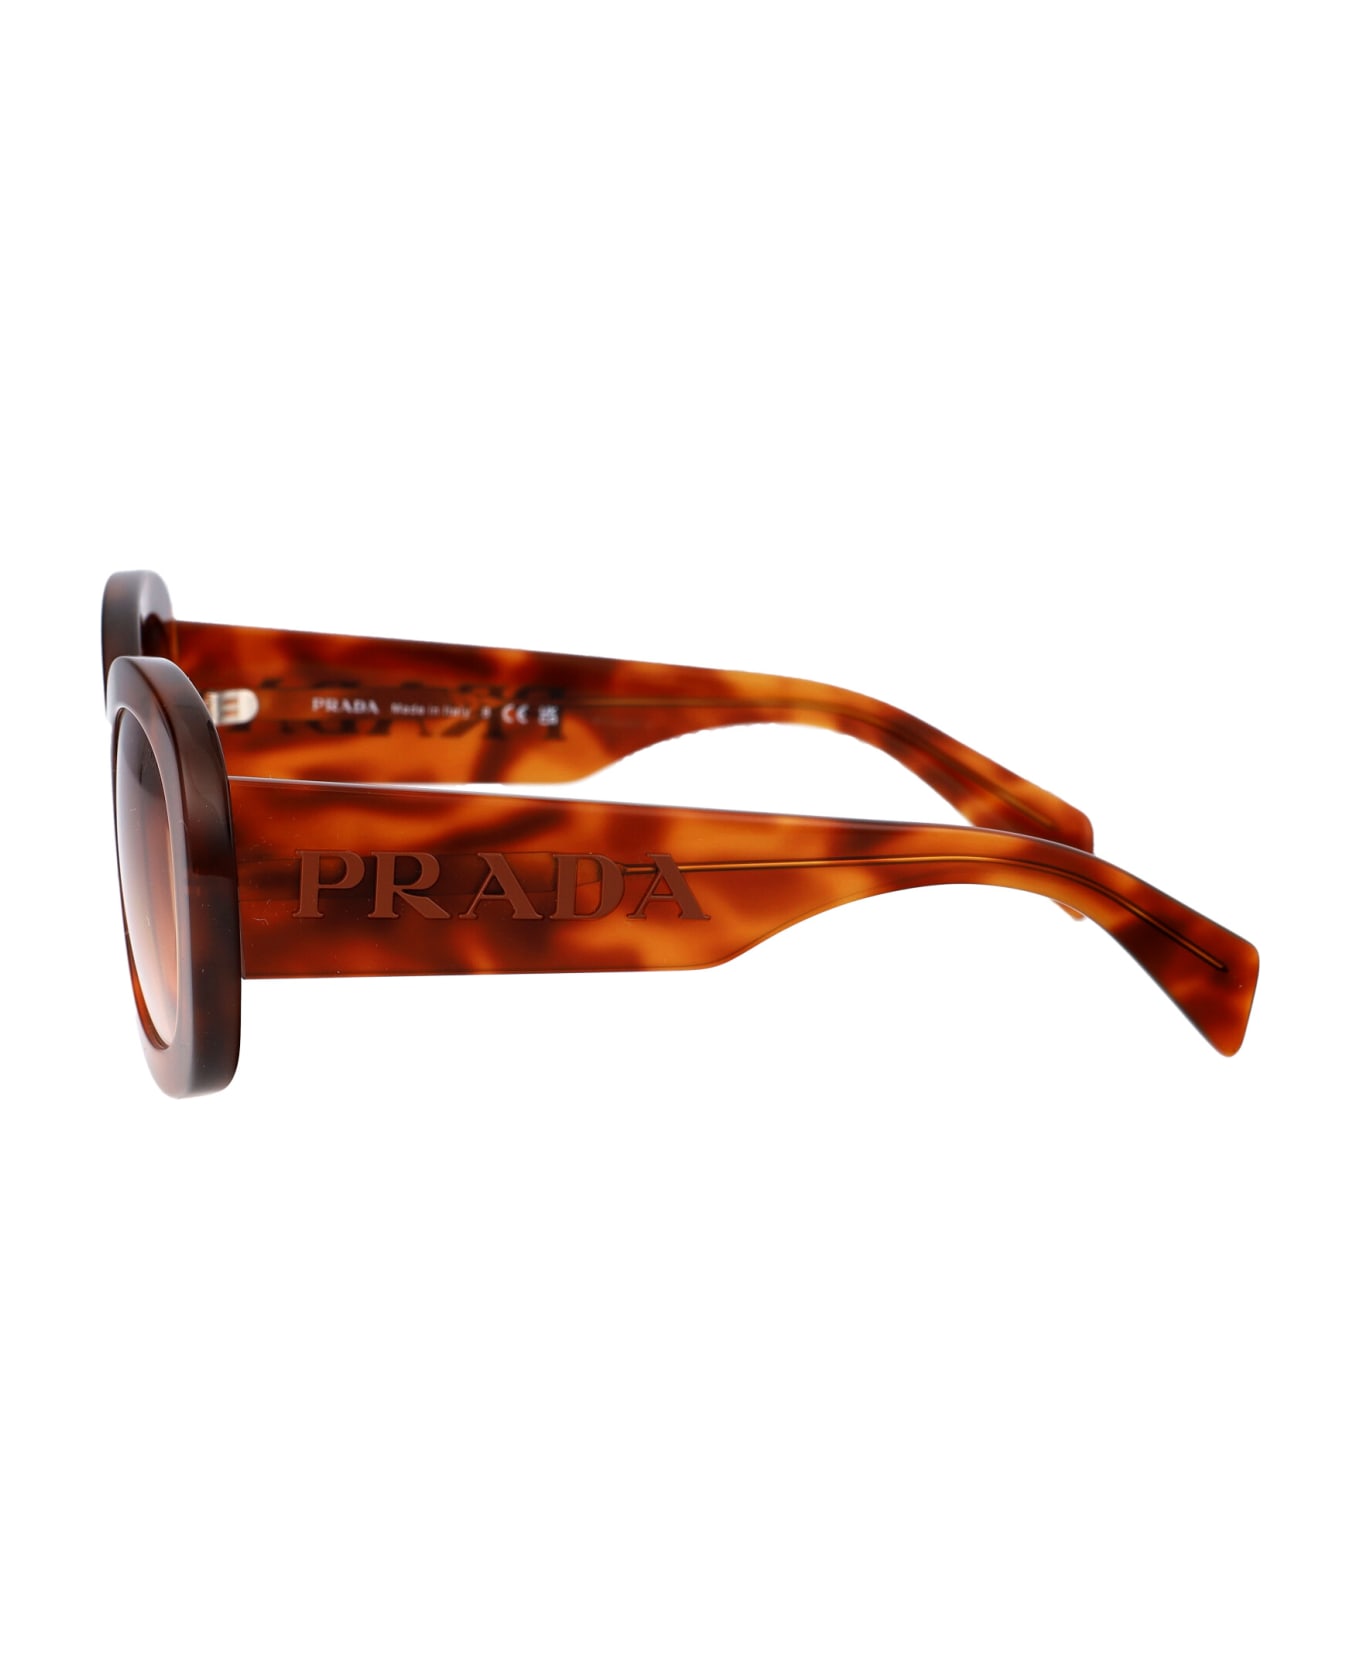 Prada Eyewear 0pr A13s Sunglasses - 18R70E Cognac Tortoise サングラス